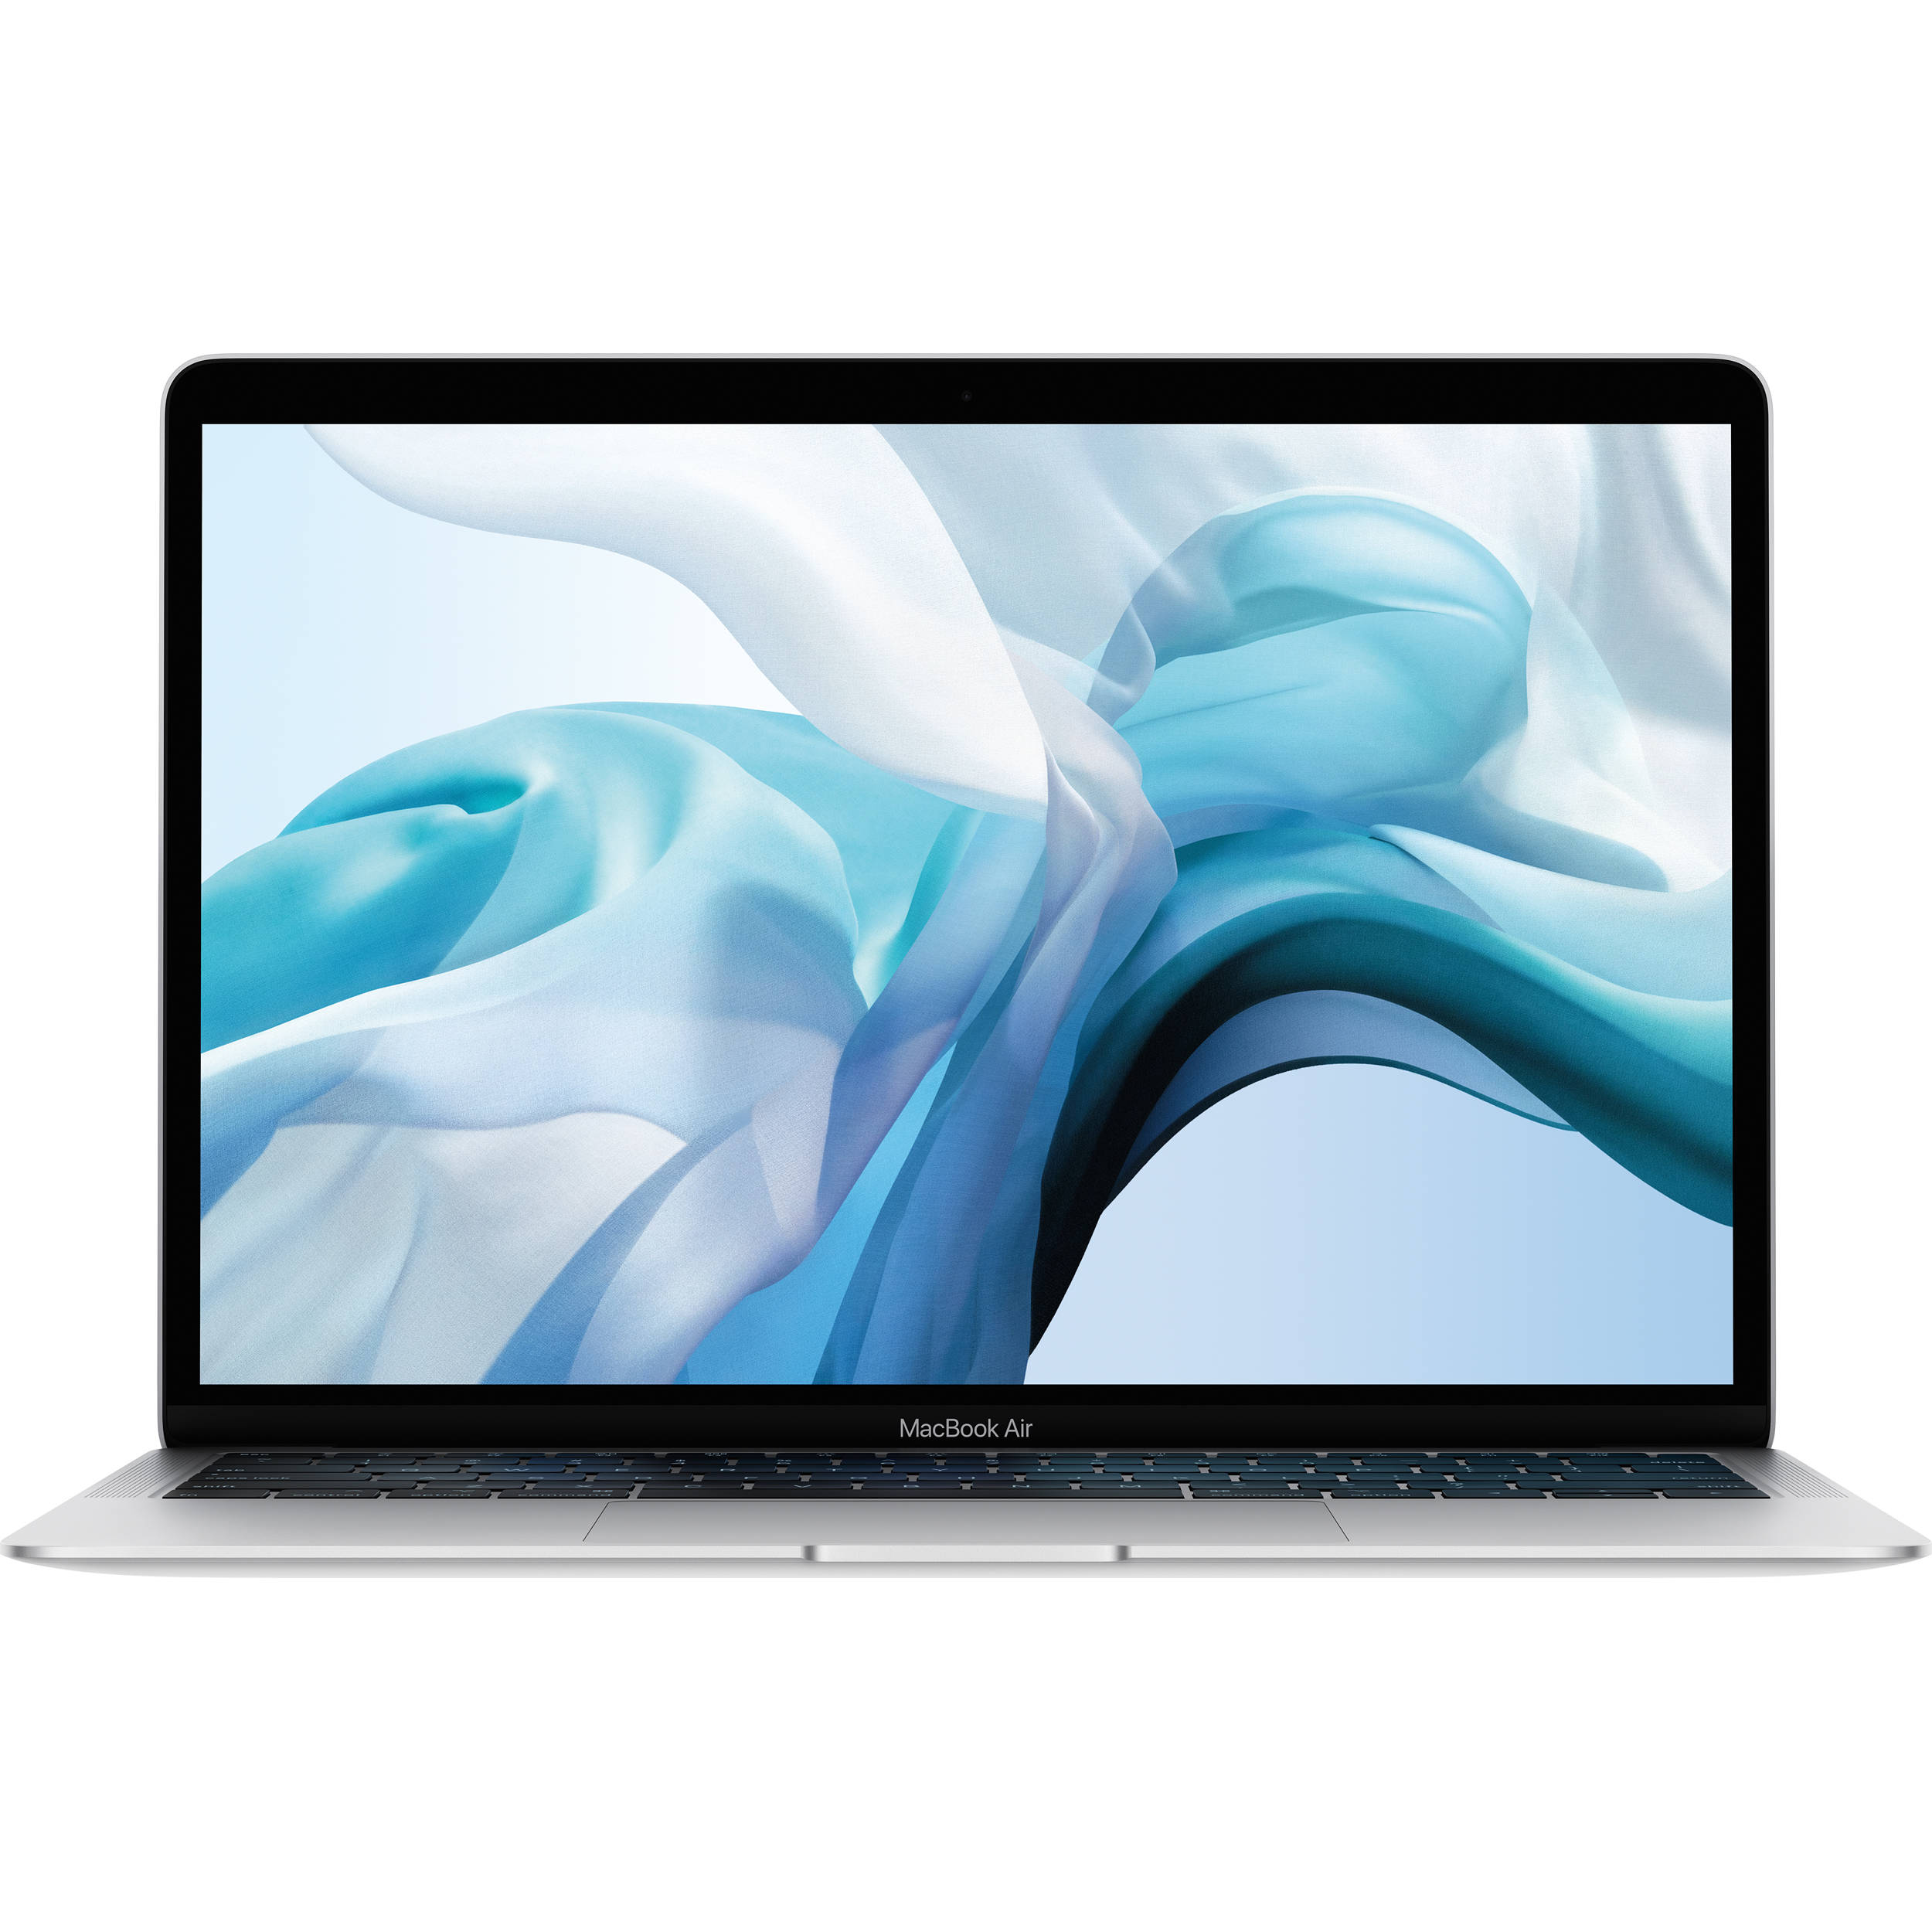 Open Box Apple MacBook Air Laptop, 13.3" Retina Display, Intel Core i5, 8GB RAM, 256GB SSD, Mac OS, Silver, MREC2LL/A - image 1 of 2